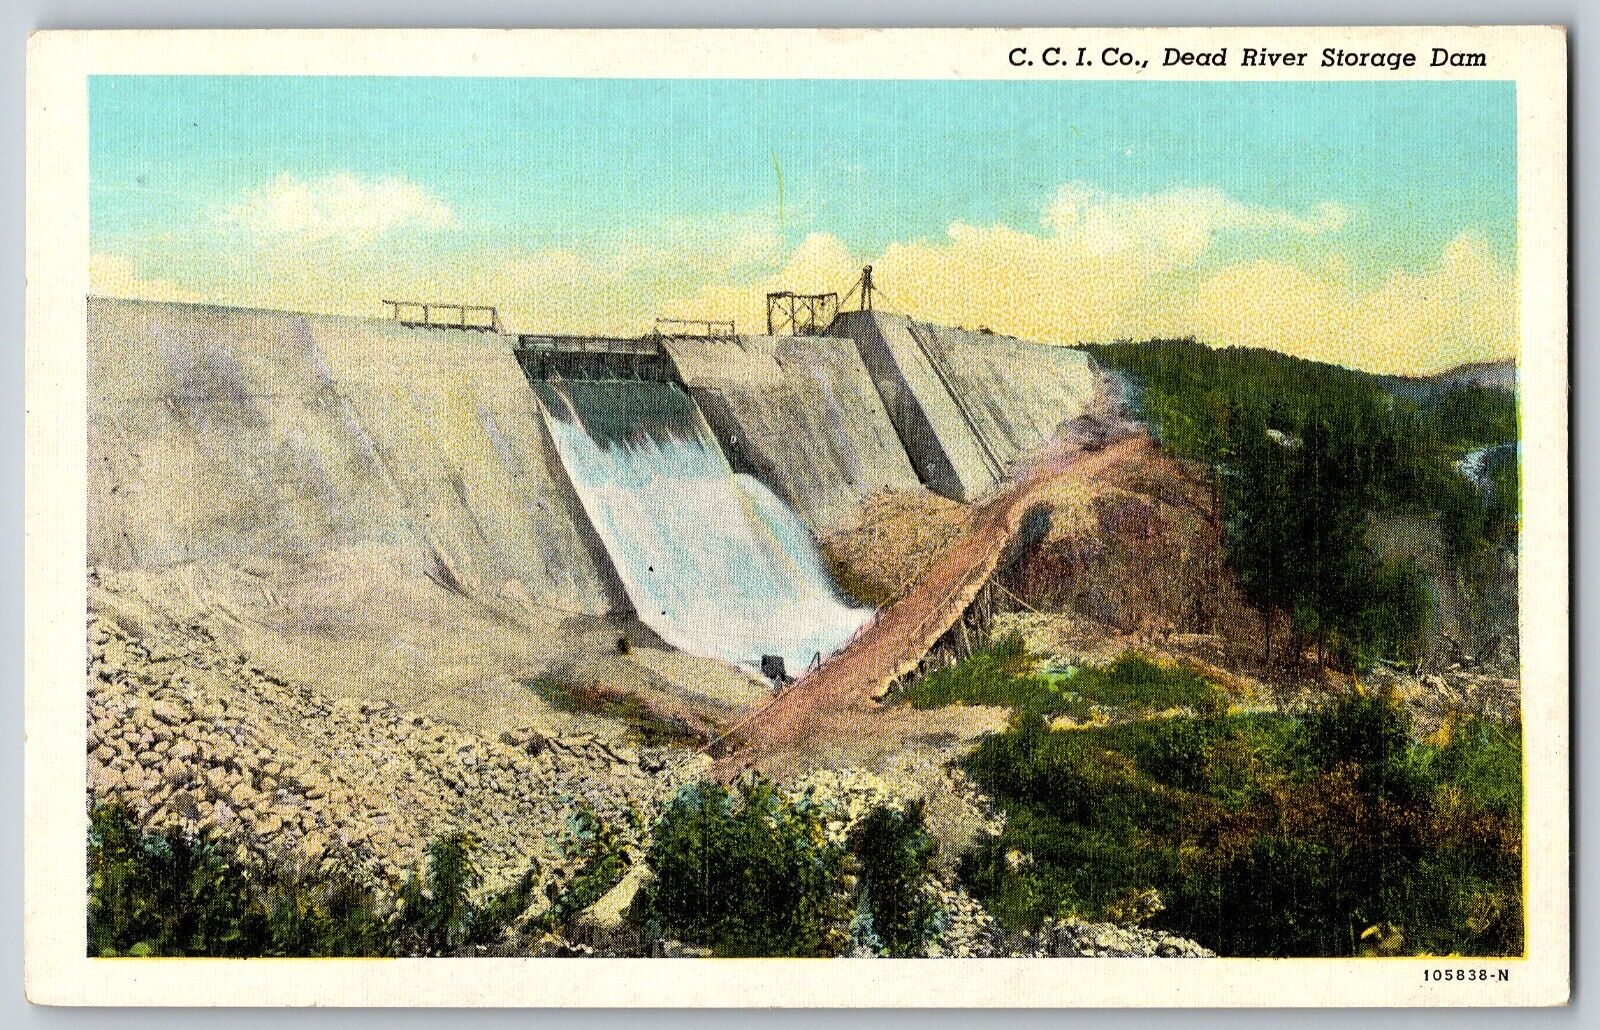 Michigan MI - Dead River Storage Dam C.C.I. Co., - Vintage Postcard - Unposted